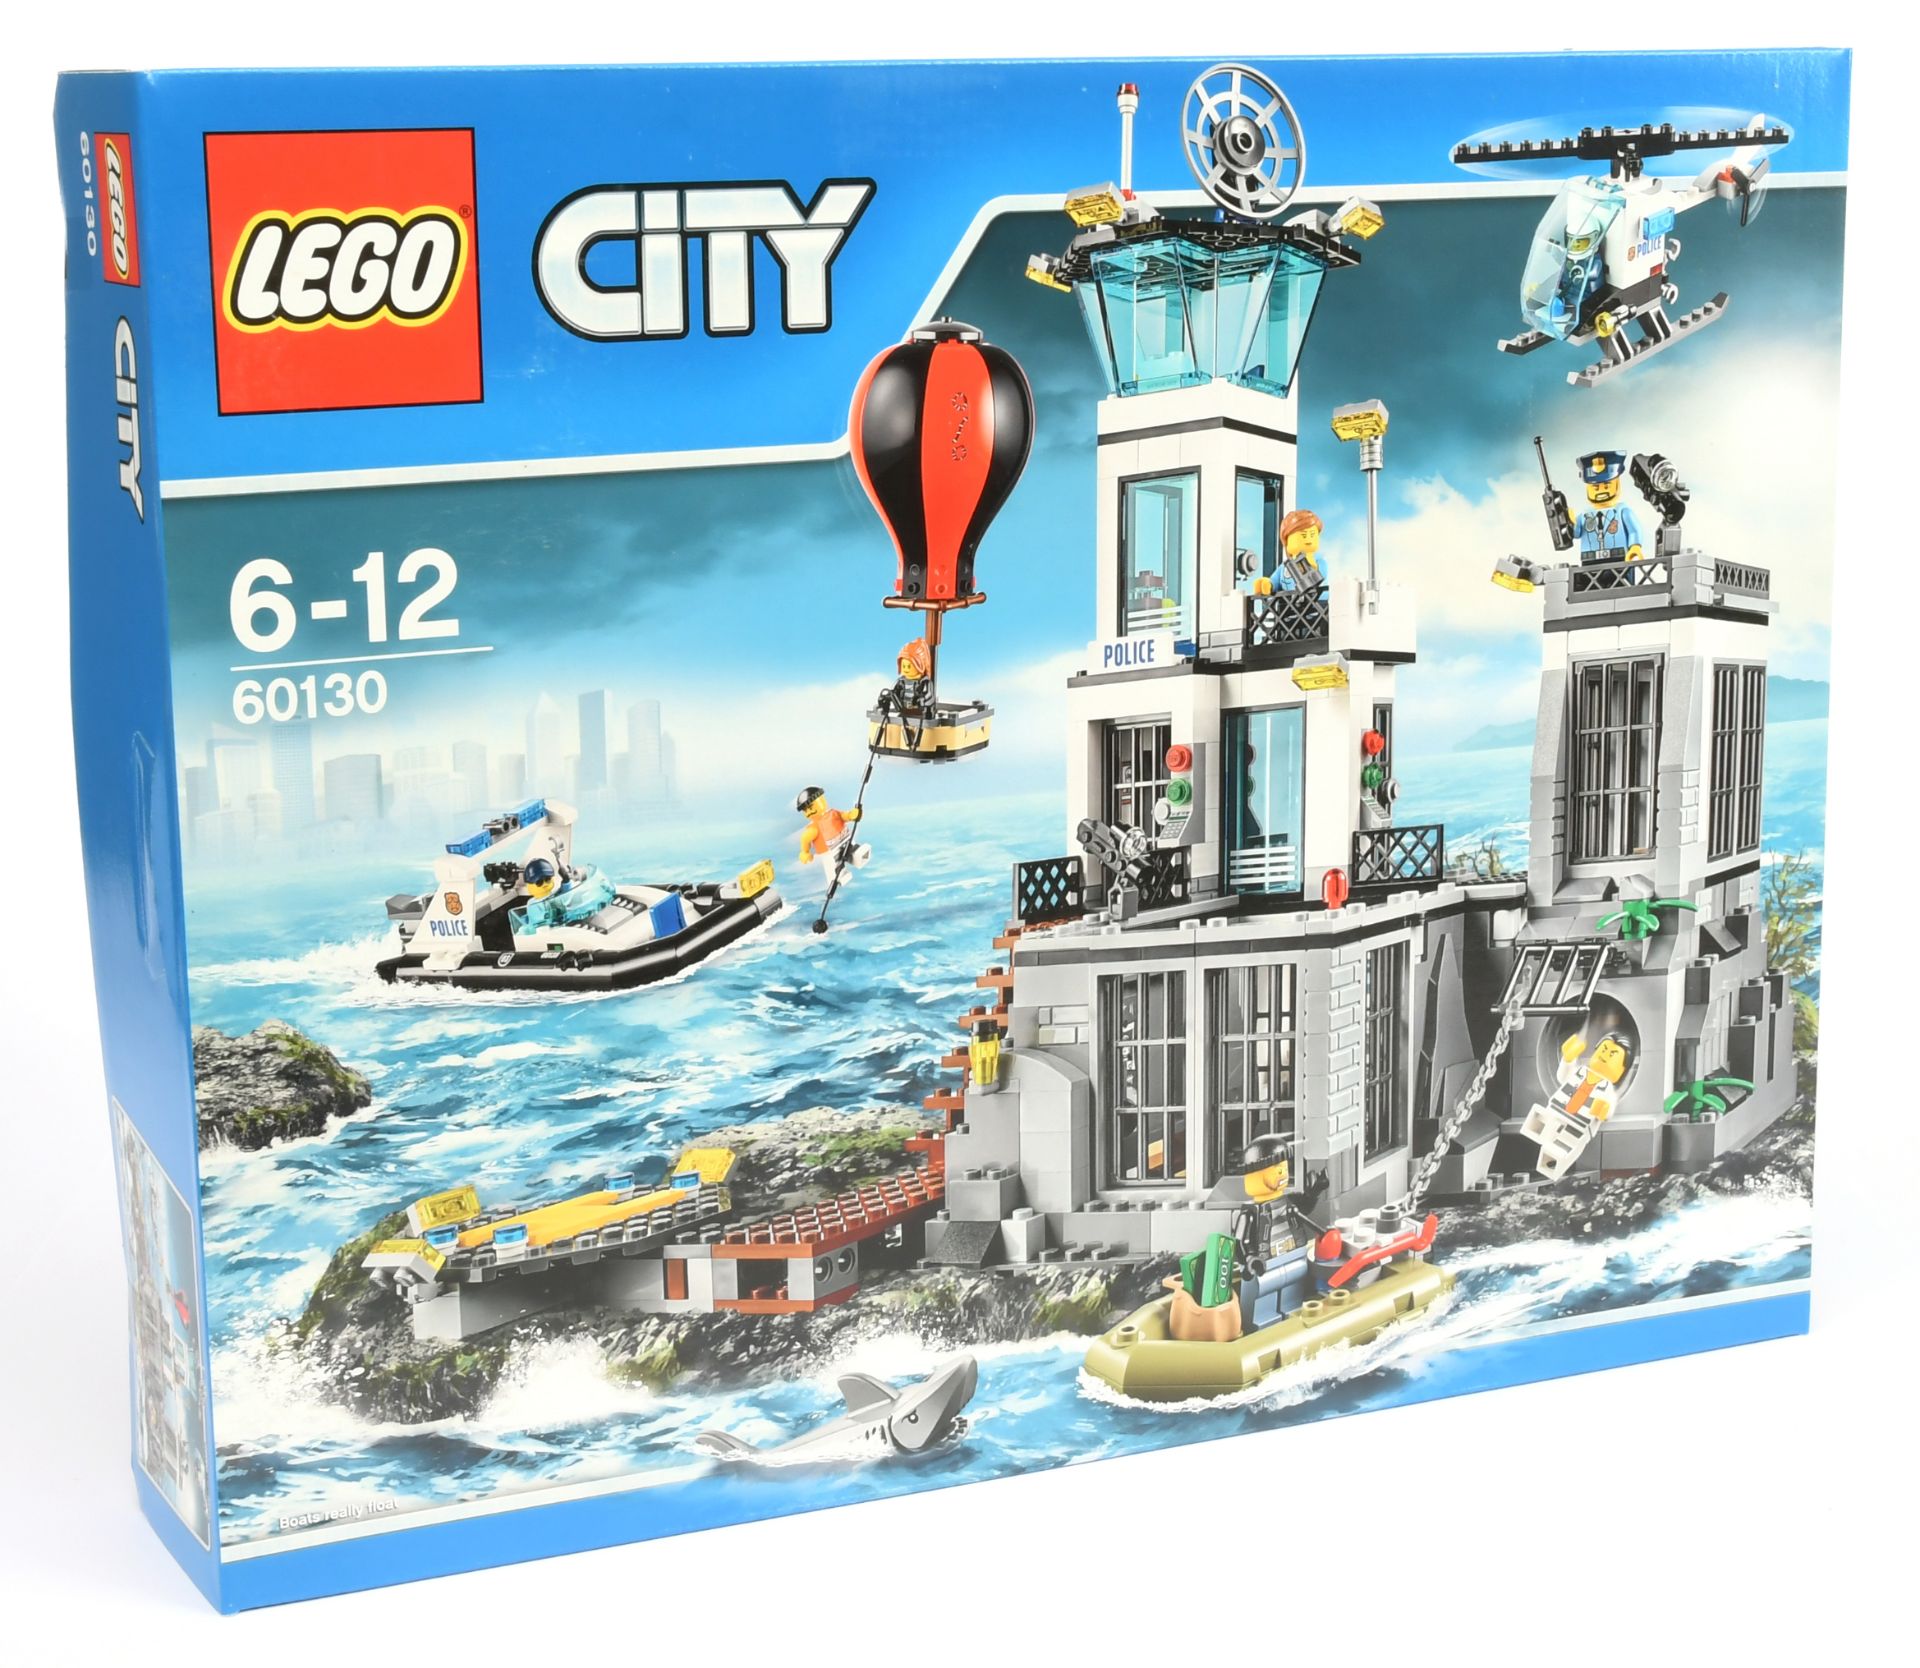 Lego City Prison Island set 60130